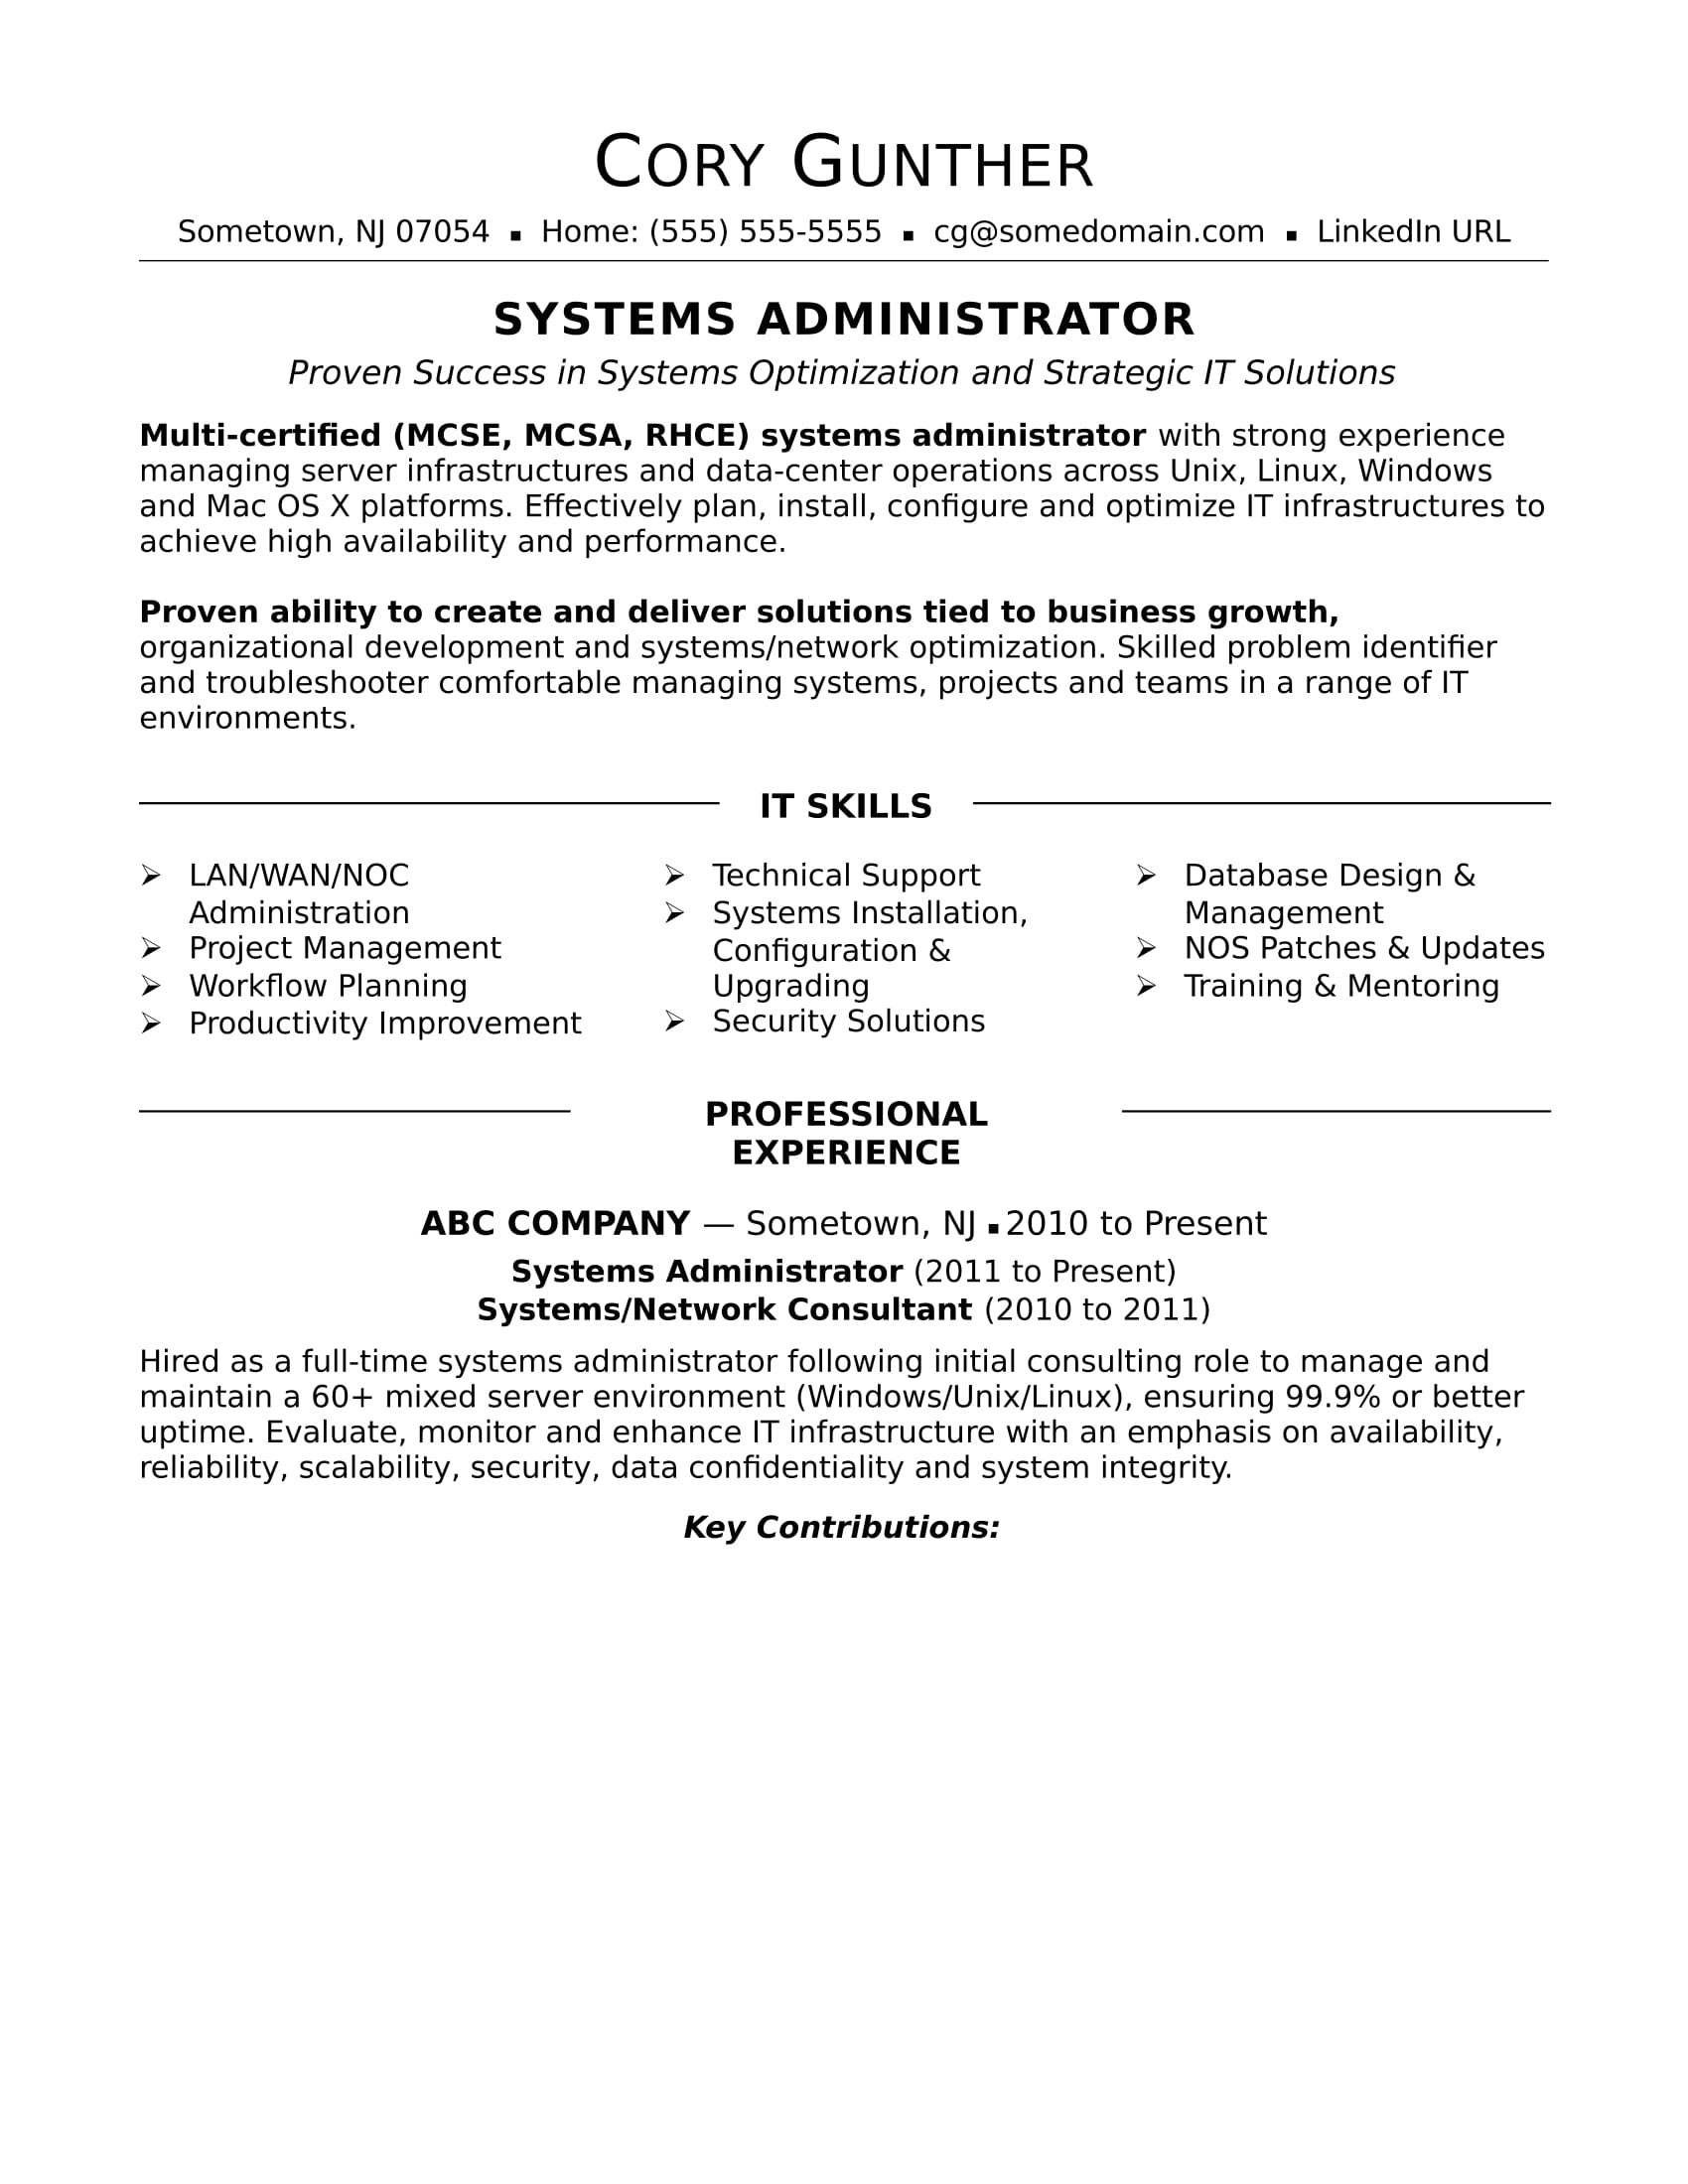 Sample Resume for Computer System Administrator Sample Resume for An Experienced Systems Administrator Monster.com